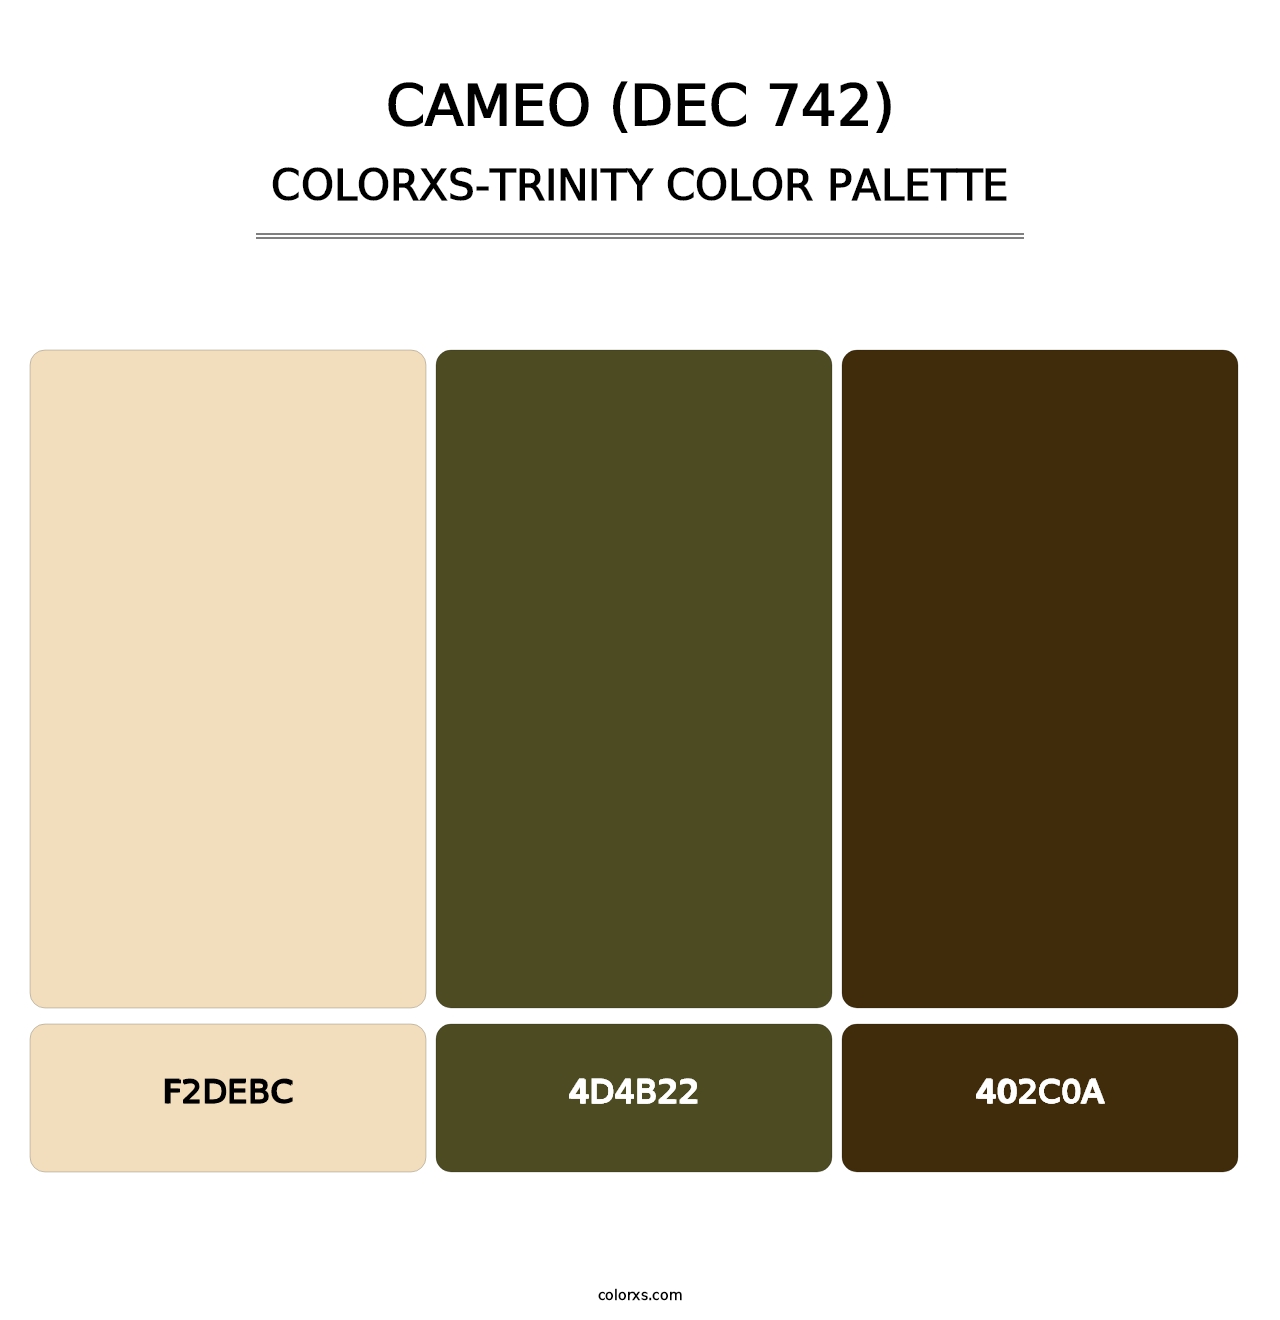 Cameo (DEC 742) - Colorxs Trinity Palette